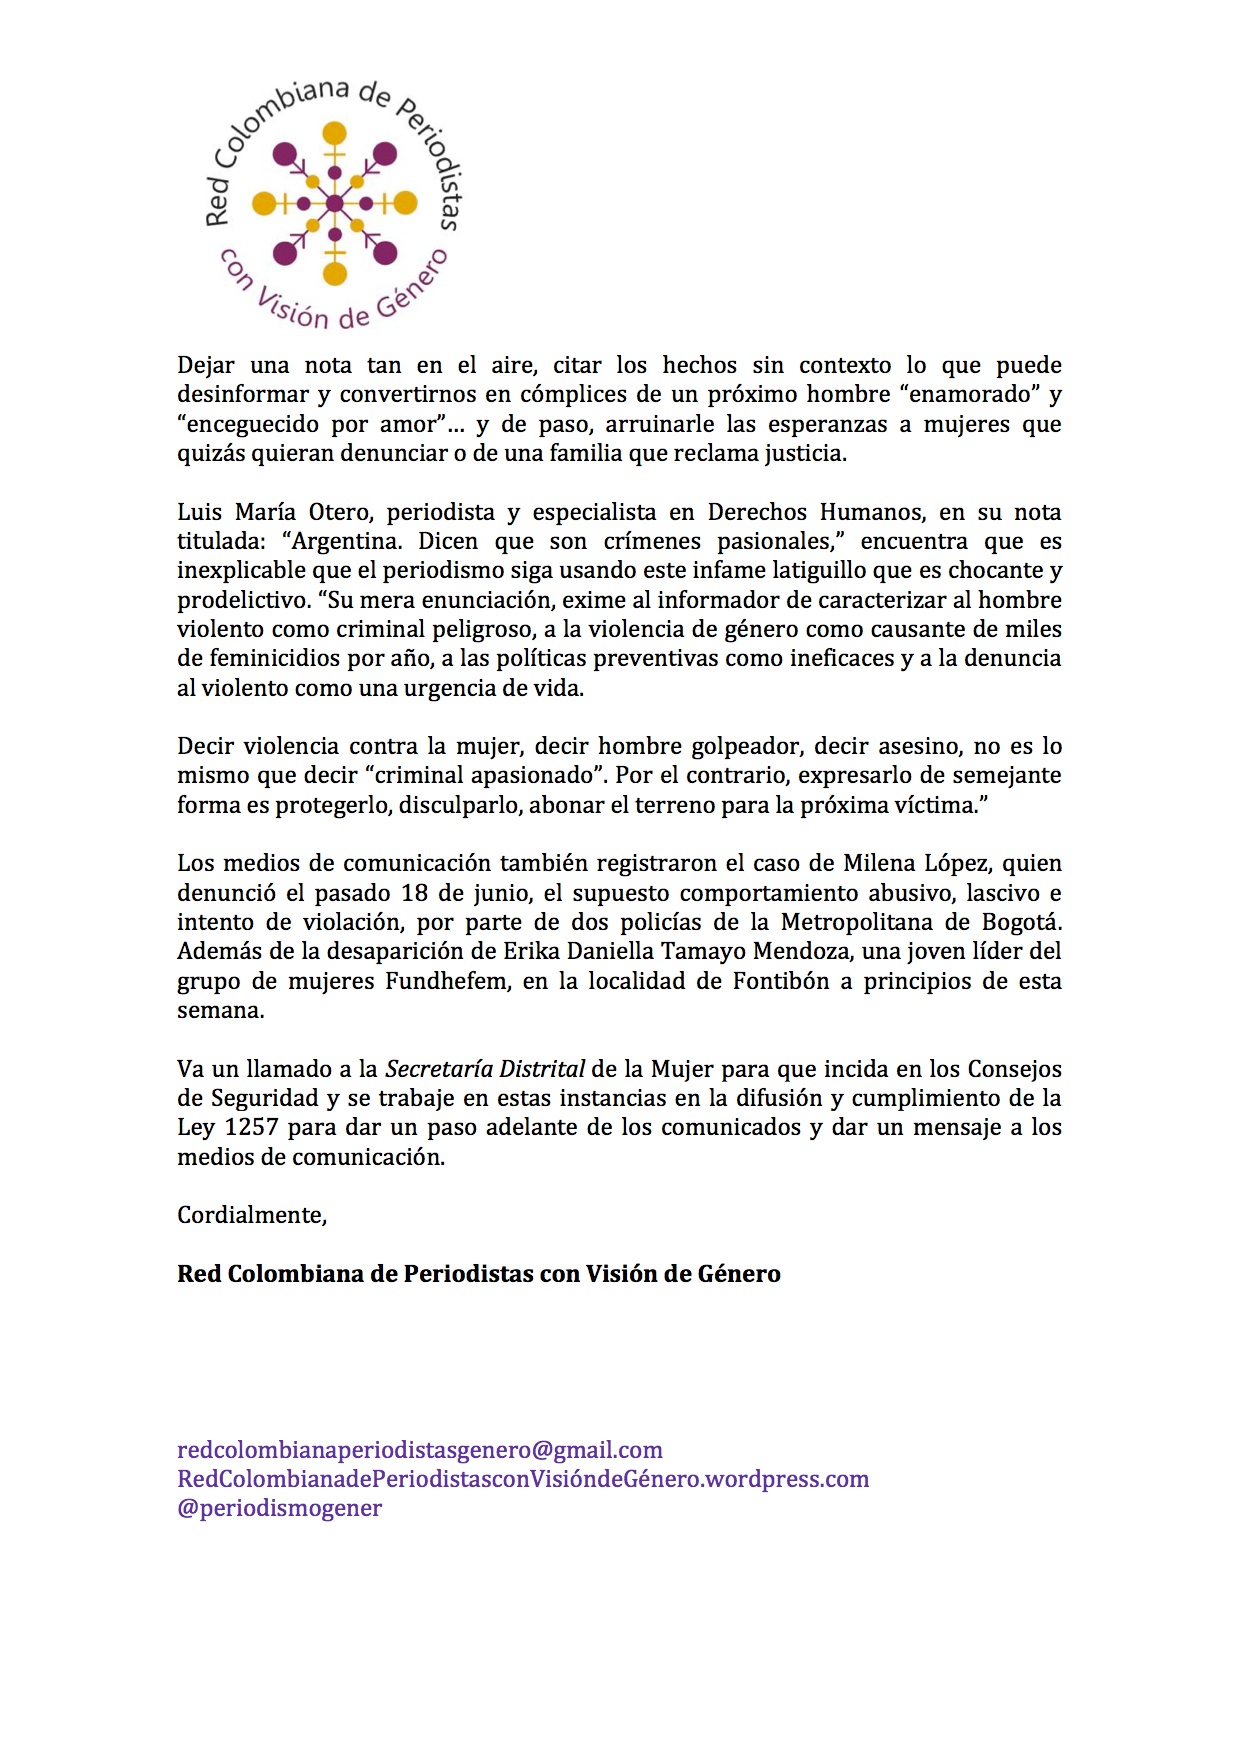 Comunicado de prensa Red Colombiana de Periodistas con Visión de Género-2